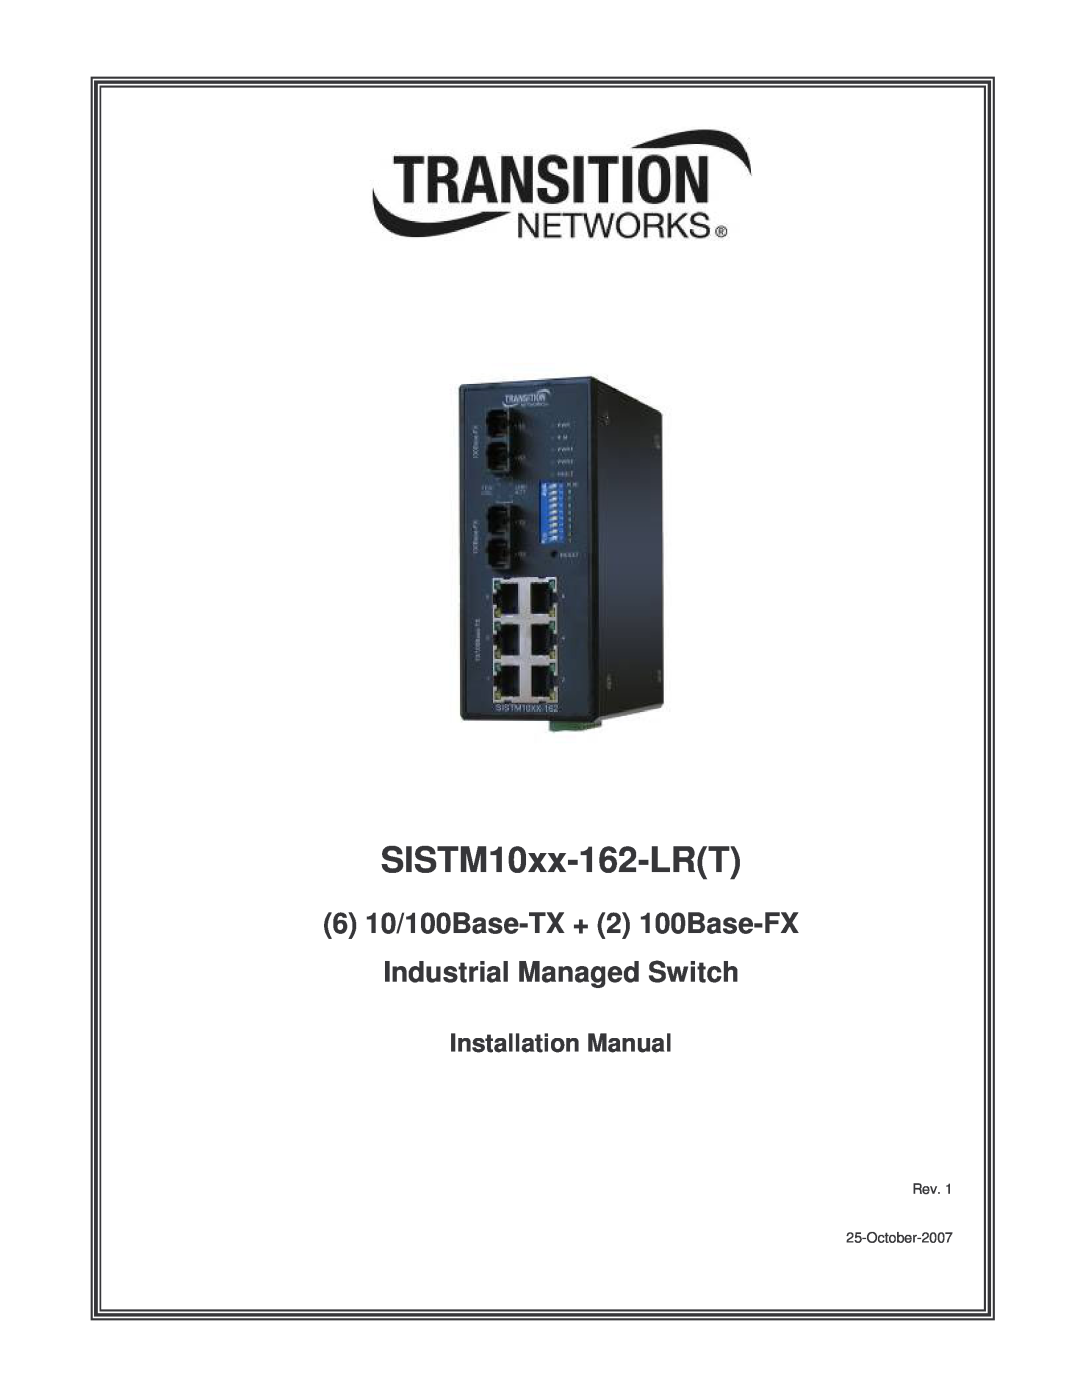 Transition Networks SISTM10XX-162-LR installation manual SISTM10xx-162-LRT, Installation Manual 